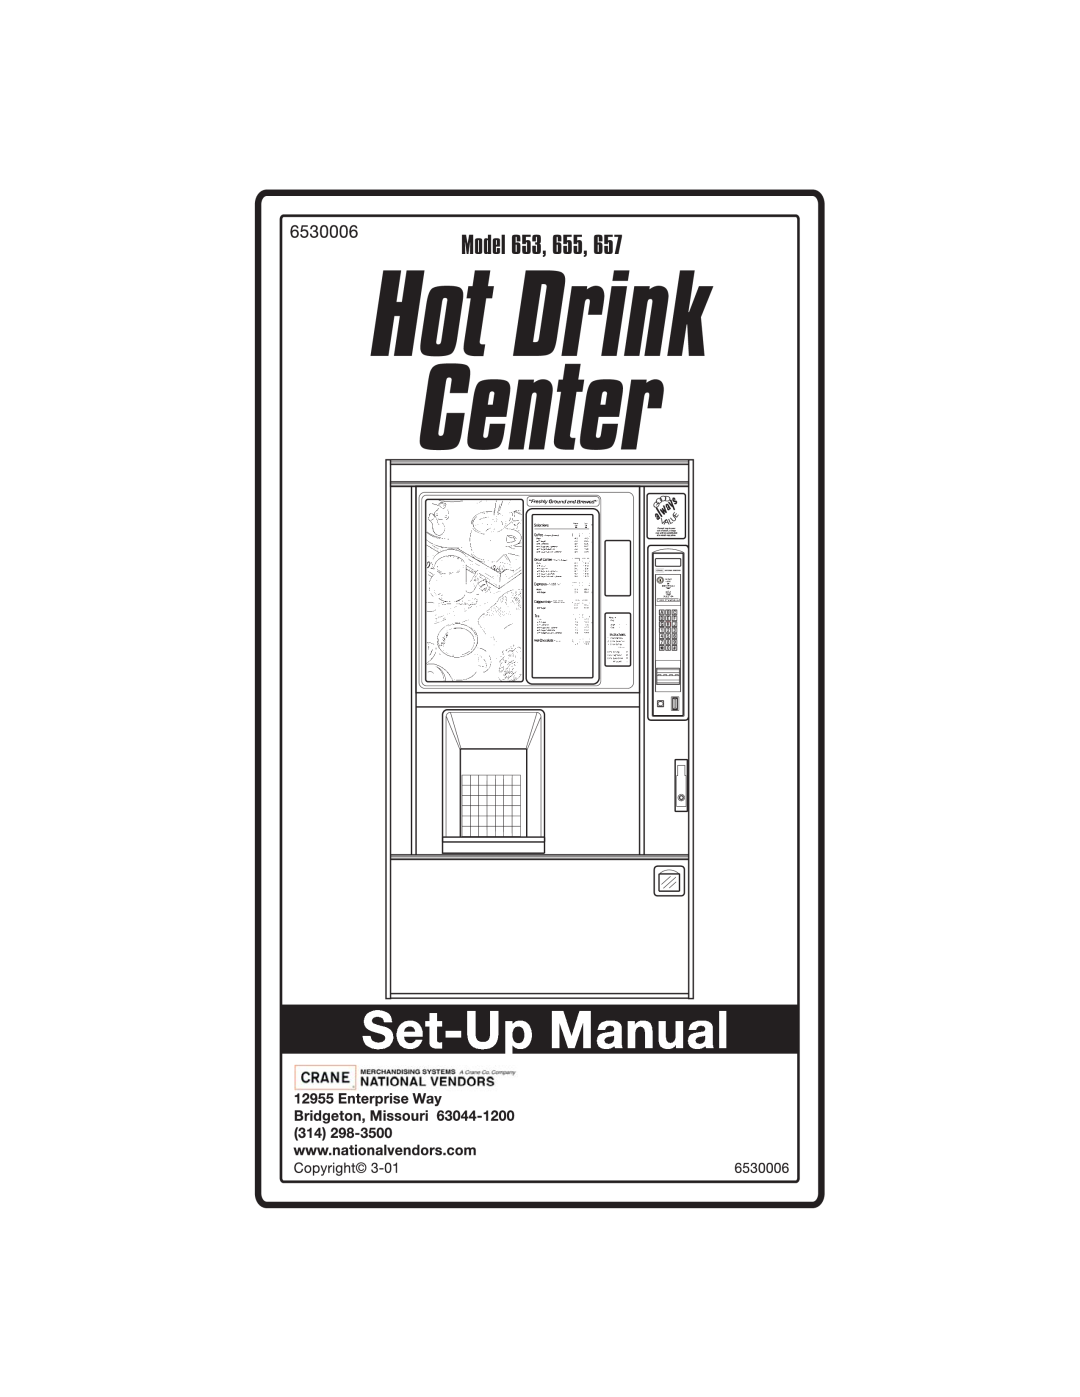 Crane Merchandising Systems 6530006, Hot Drink Center manual 